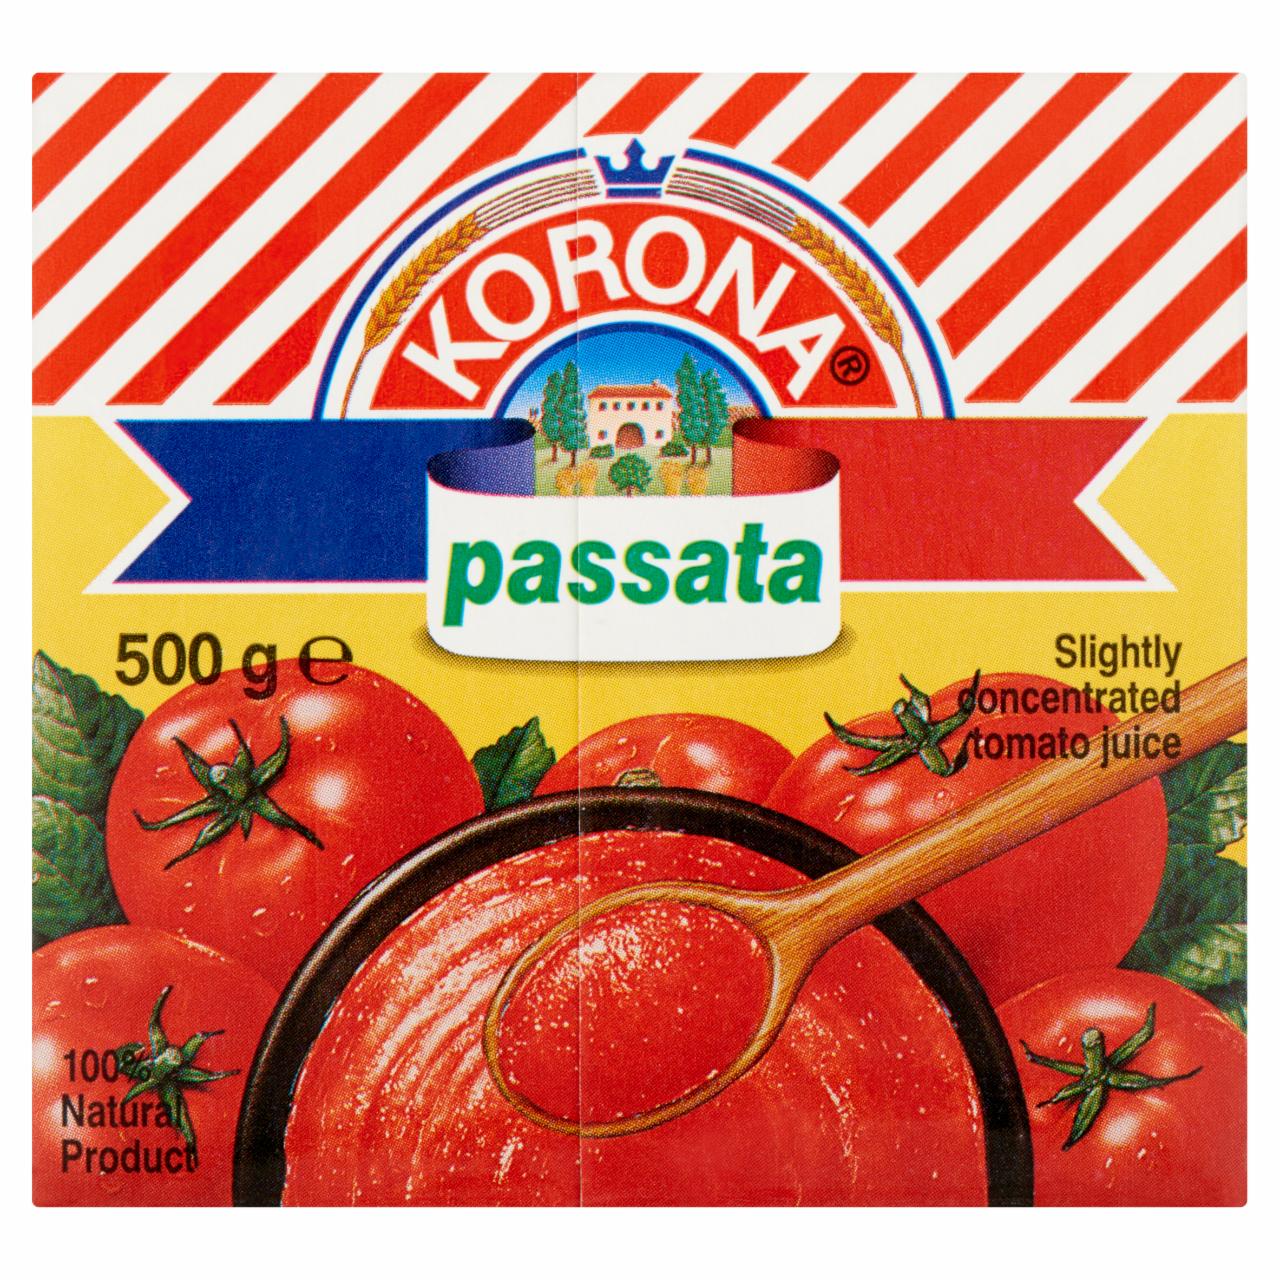 Képek - Korona Passata paradicsompüré 500 g